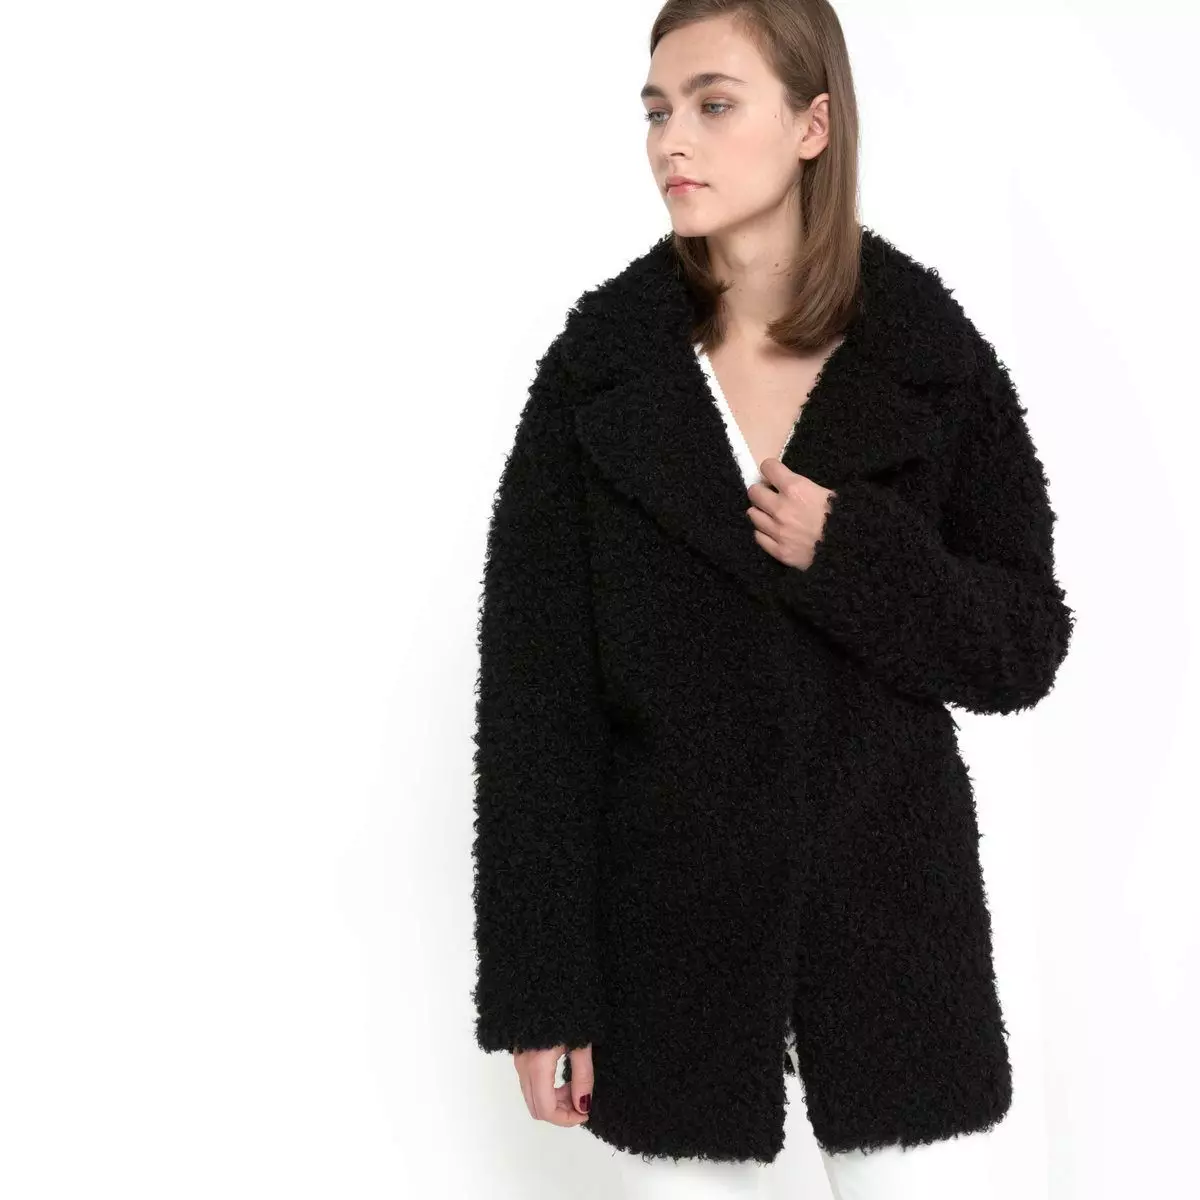 Пальто зі штучного хутра (78 фото): з каракулю, з капюшоном, плюшеве, жіночі моделі пальто 621_36